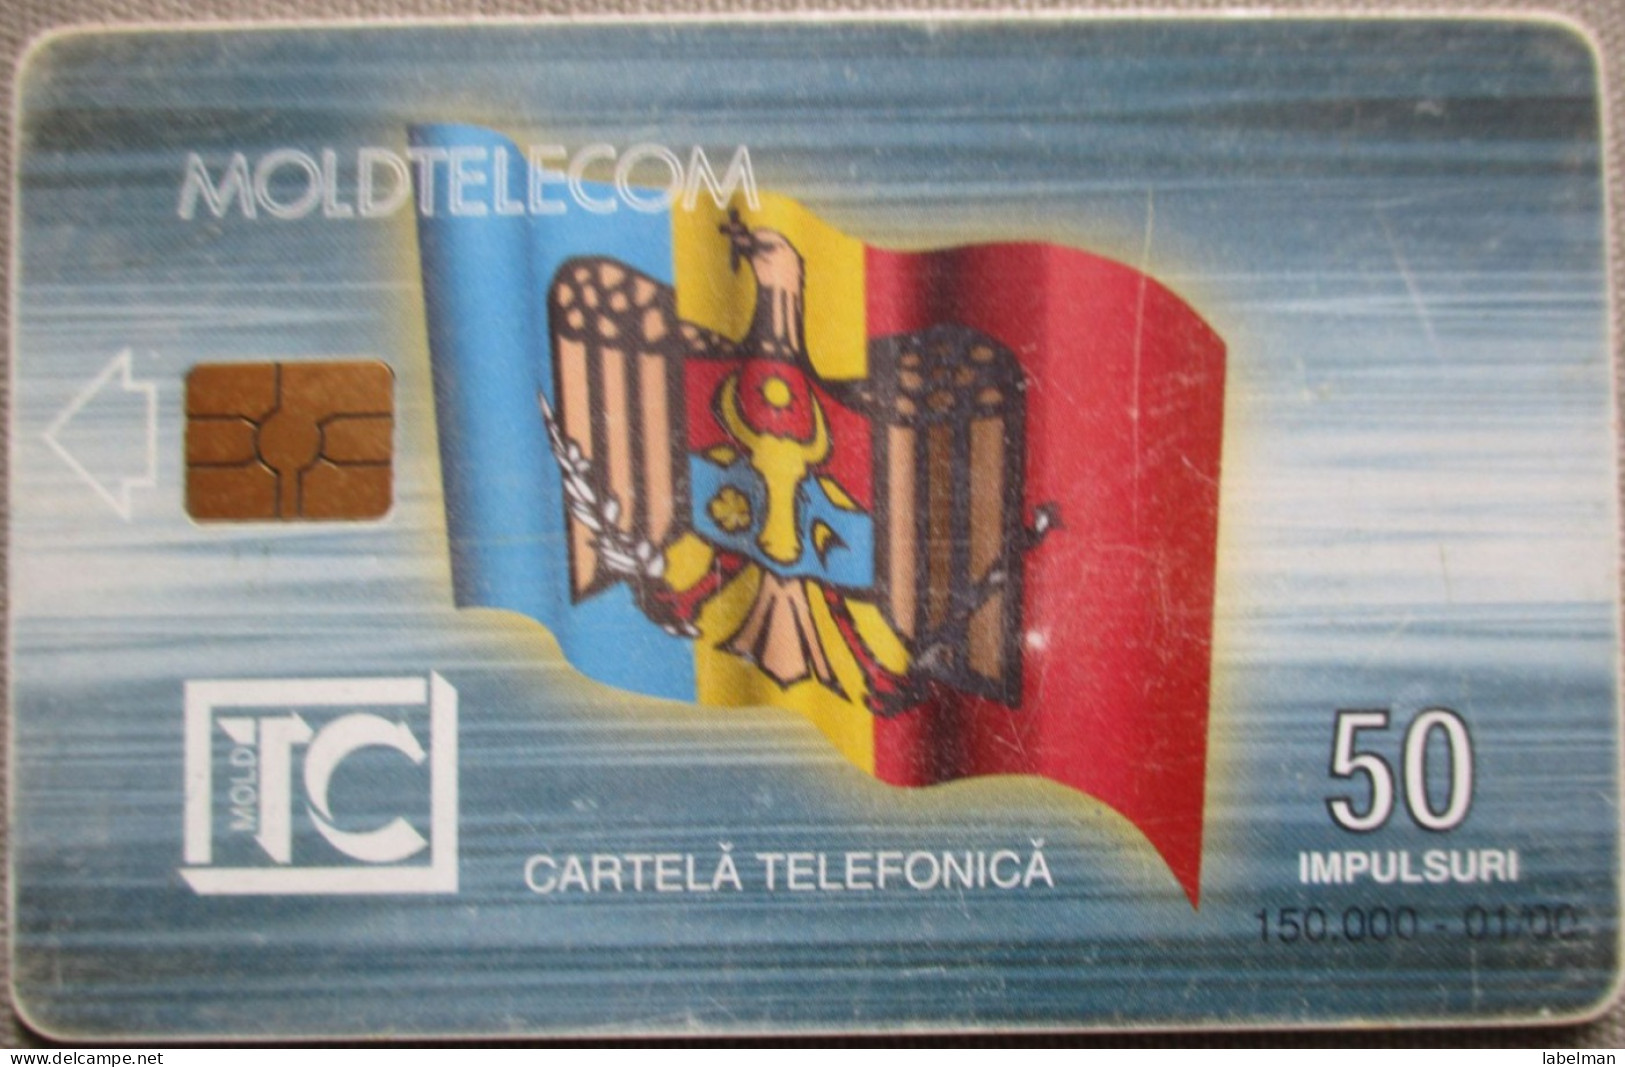 MOLDOVA MOLDTELECOM TELEPHONE PHONE TELEFONWERTKARTE PHONECARD CARTELA CARD CARTE KARTE COLLECTOR BEZEQ 50 UNITS - Moldavia